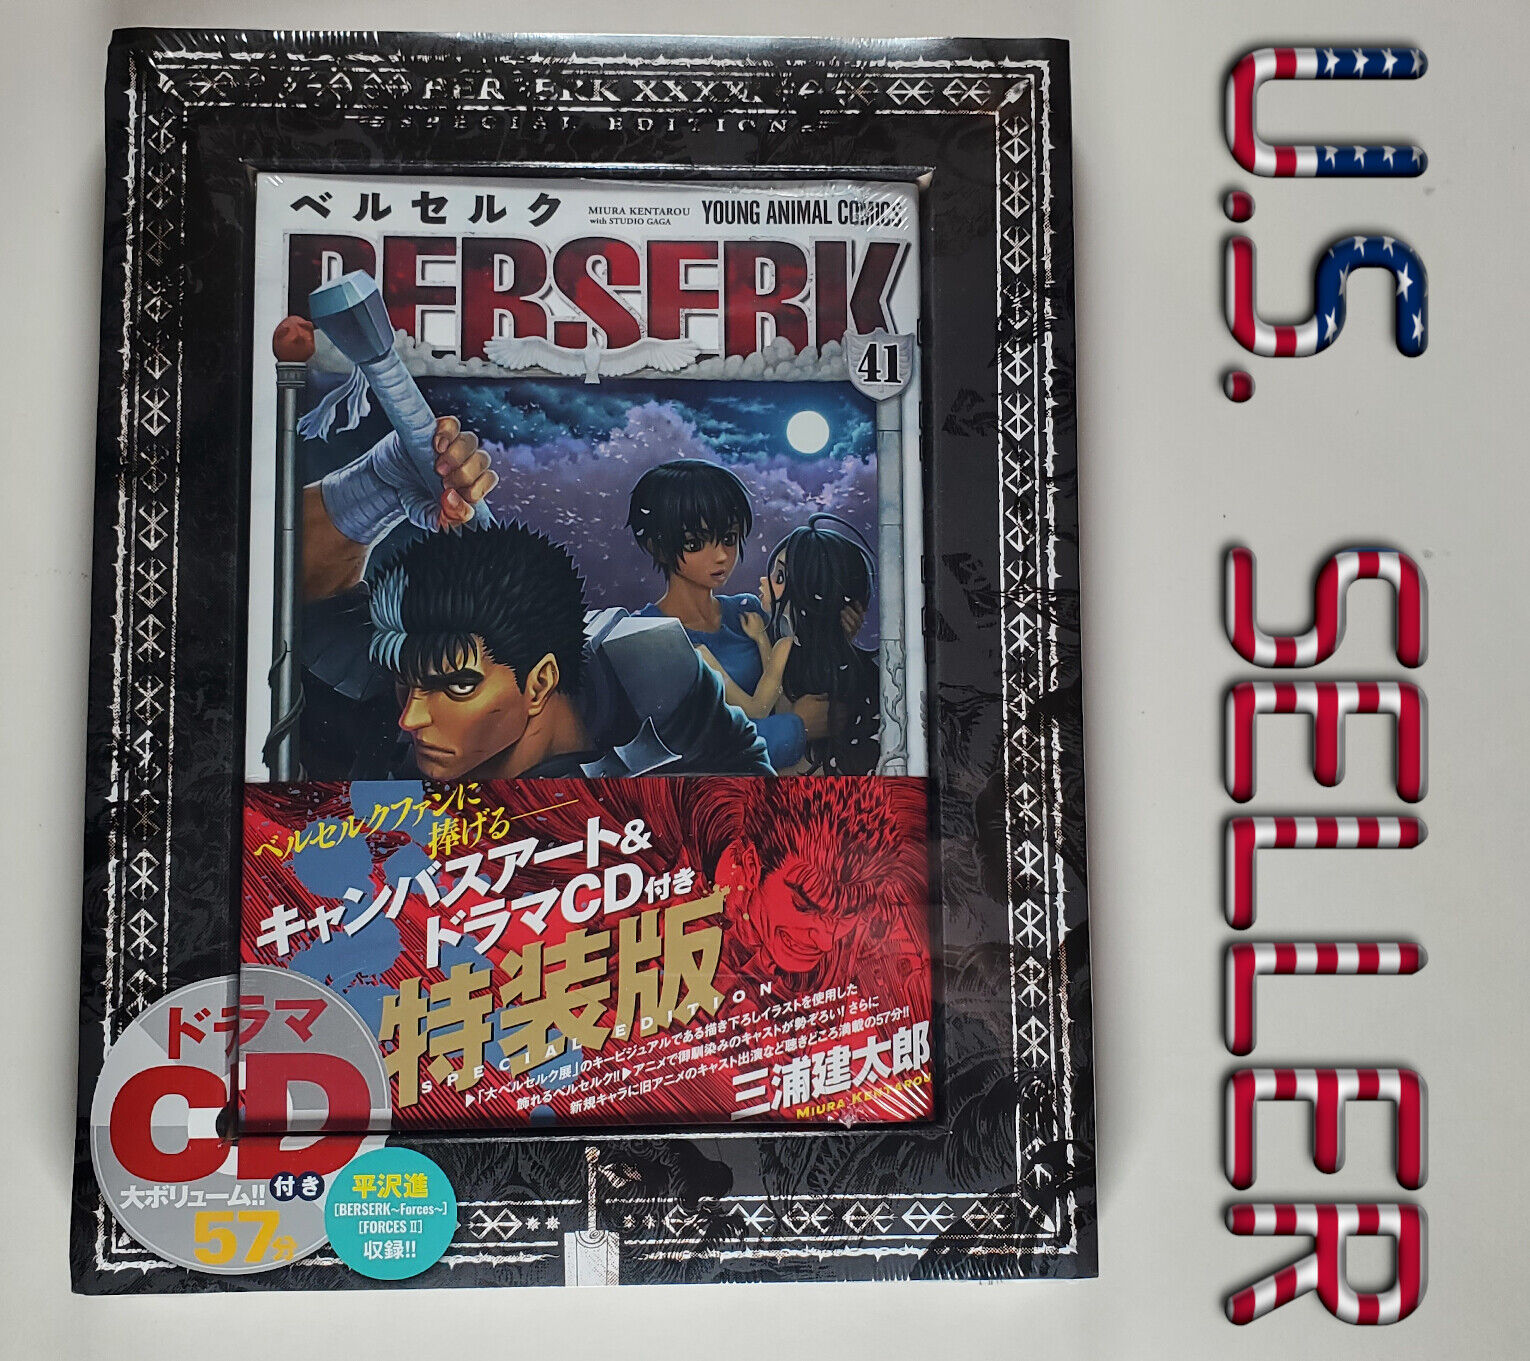 Berserk Vol. 41 SPECIAL EDITION Japanese Manga + Canvas Art & Drama CD SEALED